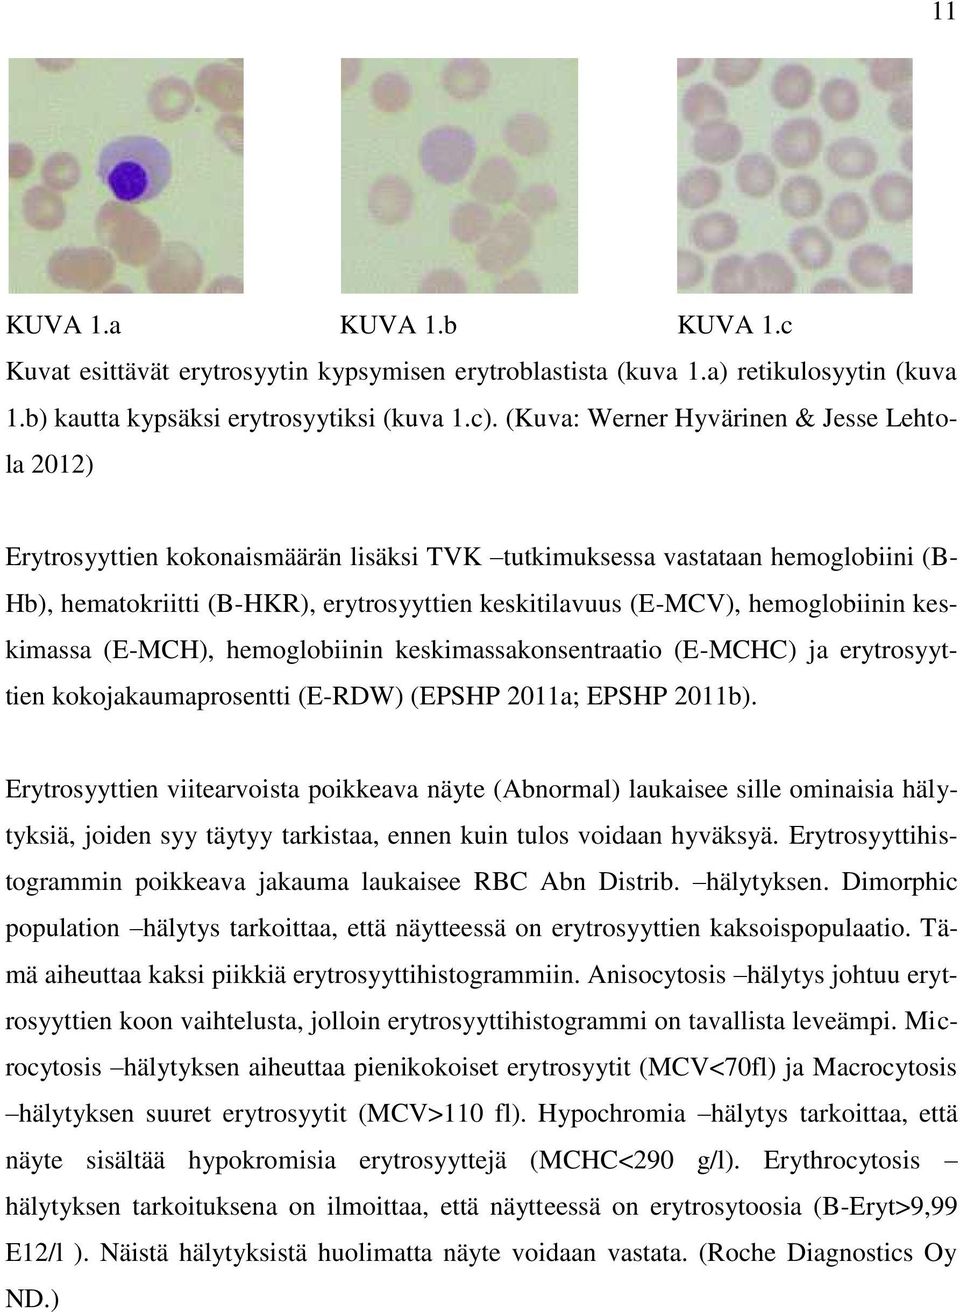 hemoglobiinin keskimassa (E -MCH), hemoglobiinin keskimassakonsentraatio (E -MCHC) ja erytrosyyttien kokojakaumaprosentti (E-RDW) (EPSHP 2011a; EPSHP 2011b).